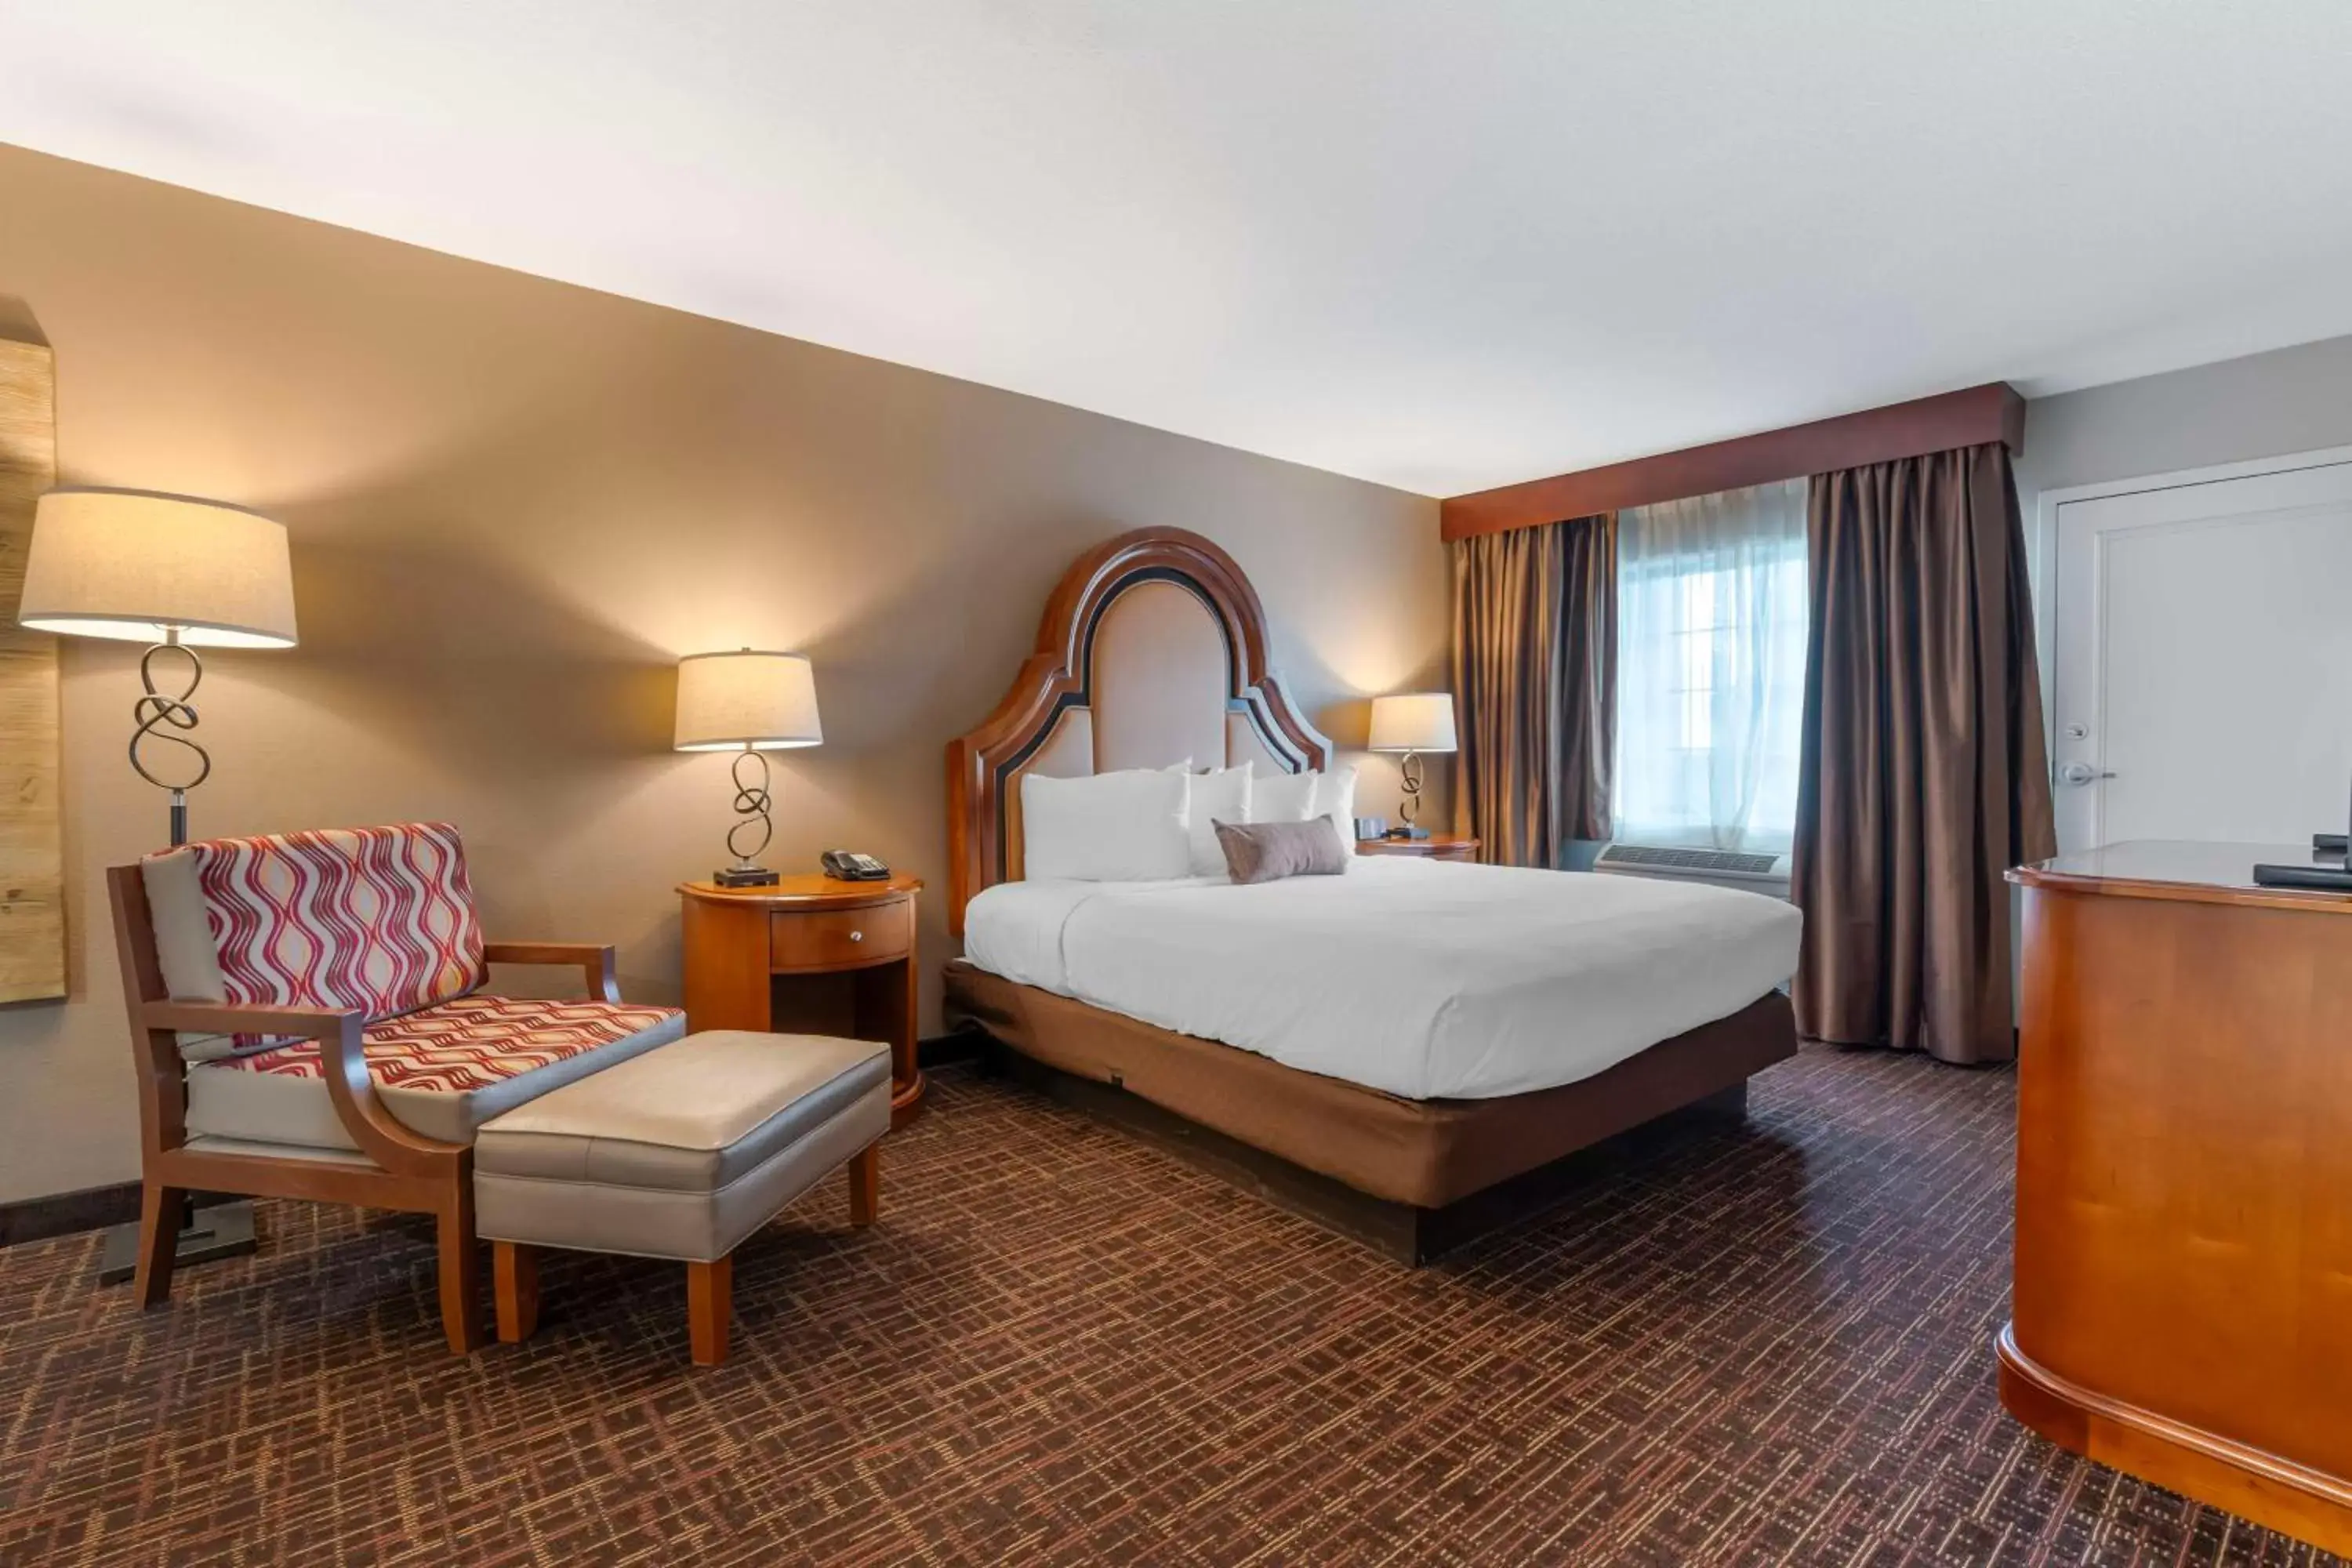 Bedroom, Bed in Best Western Plus Boomtown Casino Hotel